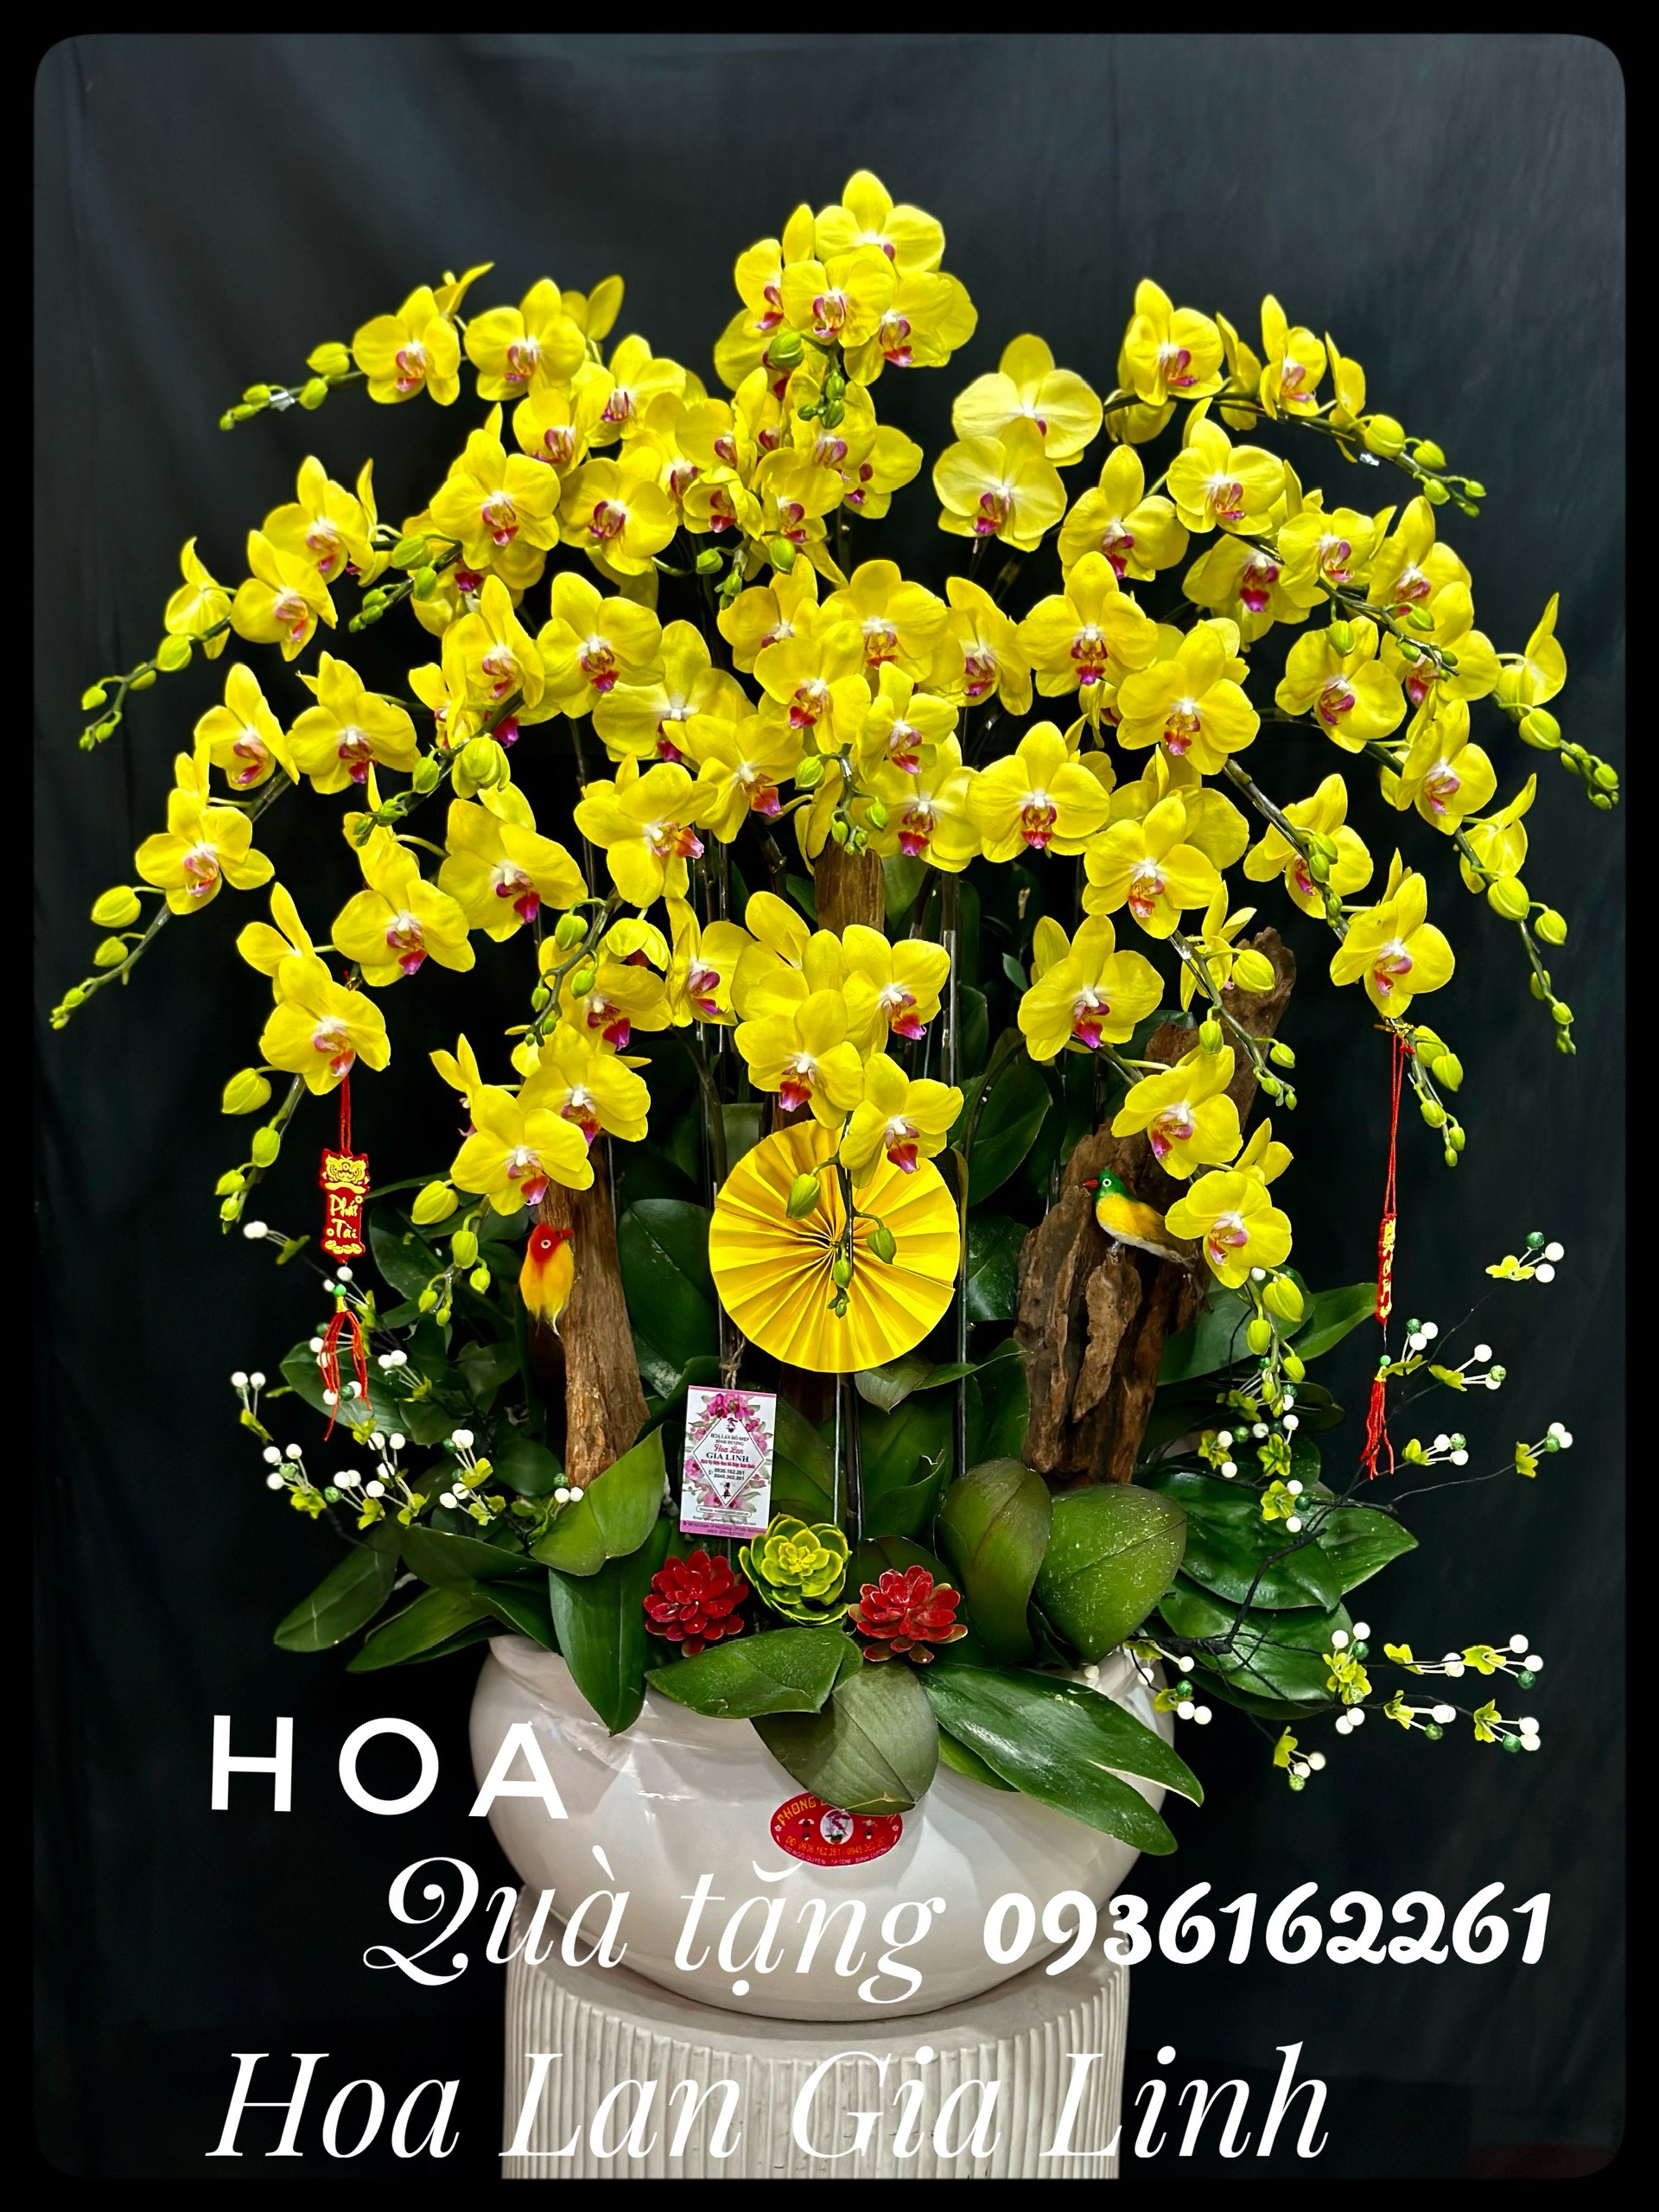 Cửa hàng hoa lan hồ điệp Phong Lan Gia Linh